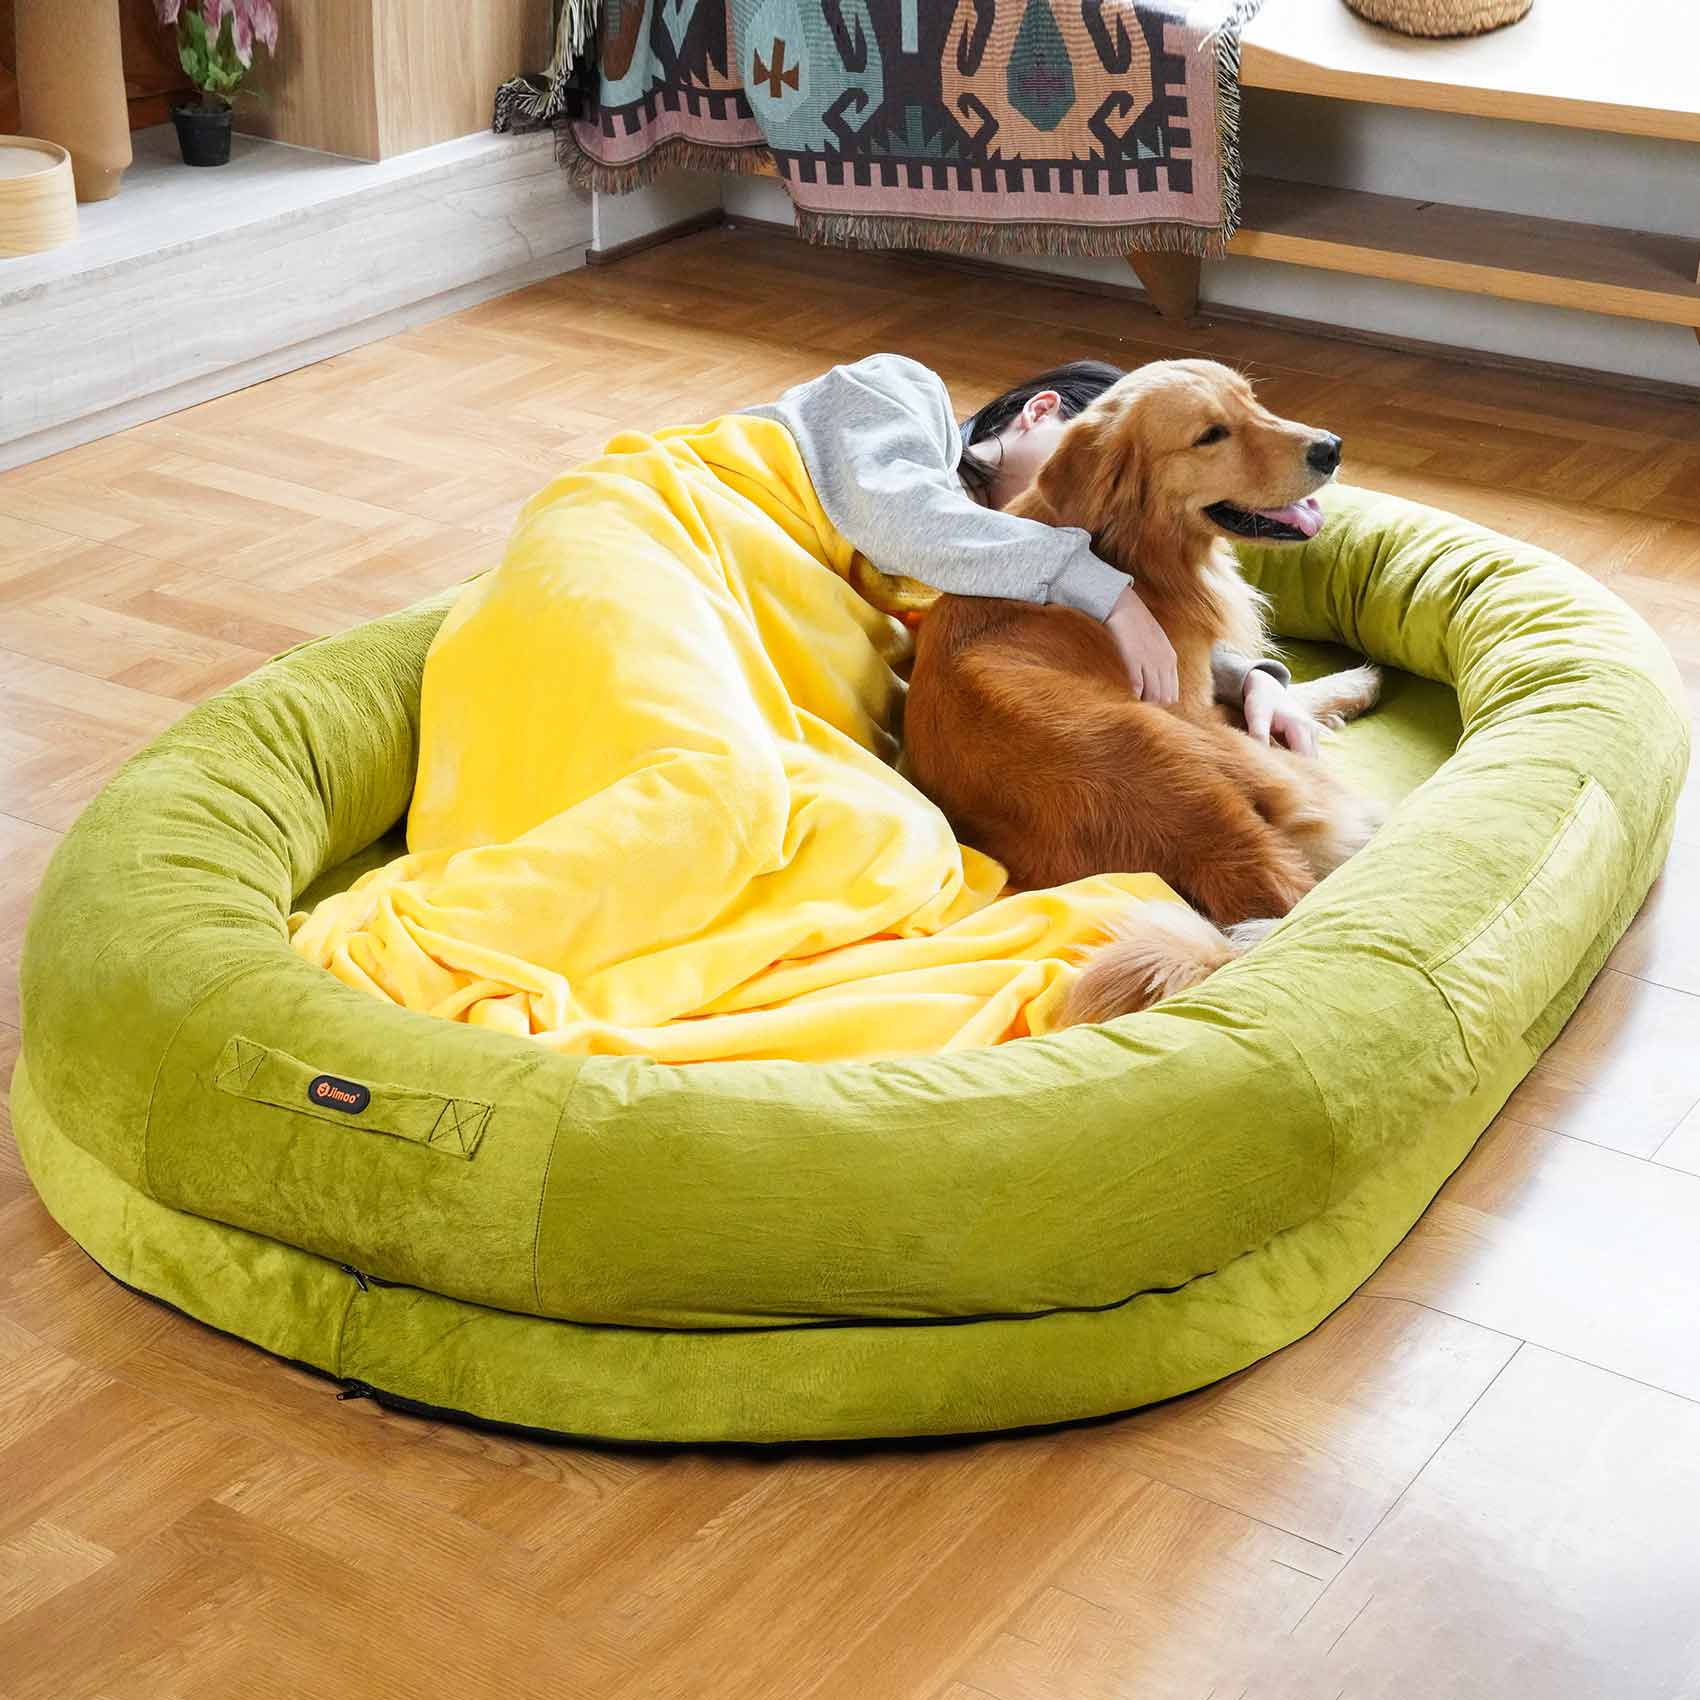 J JIMOO Human Dog Bed for People,70